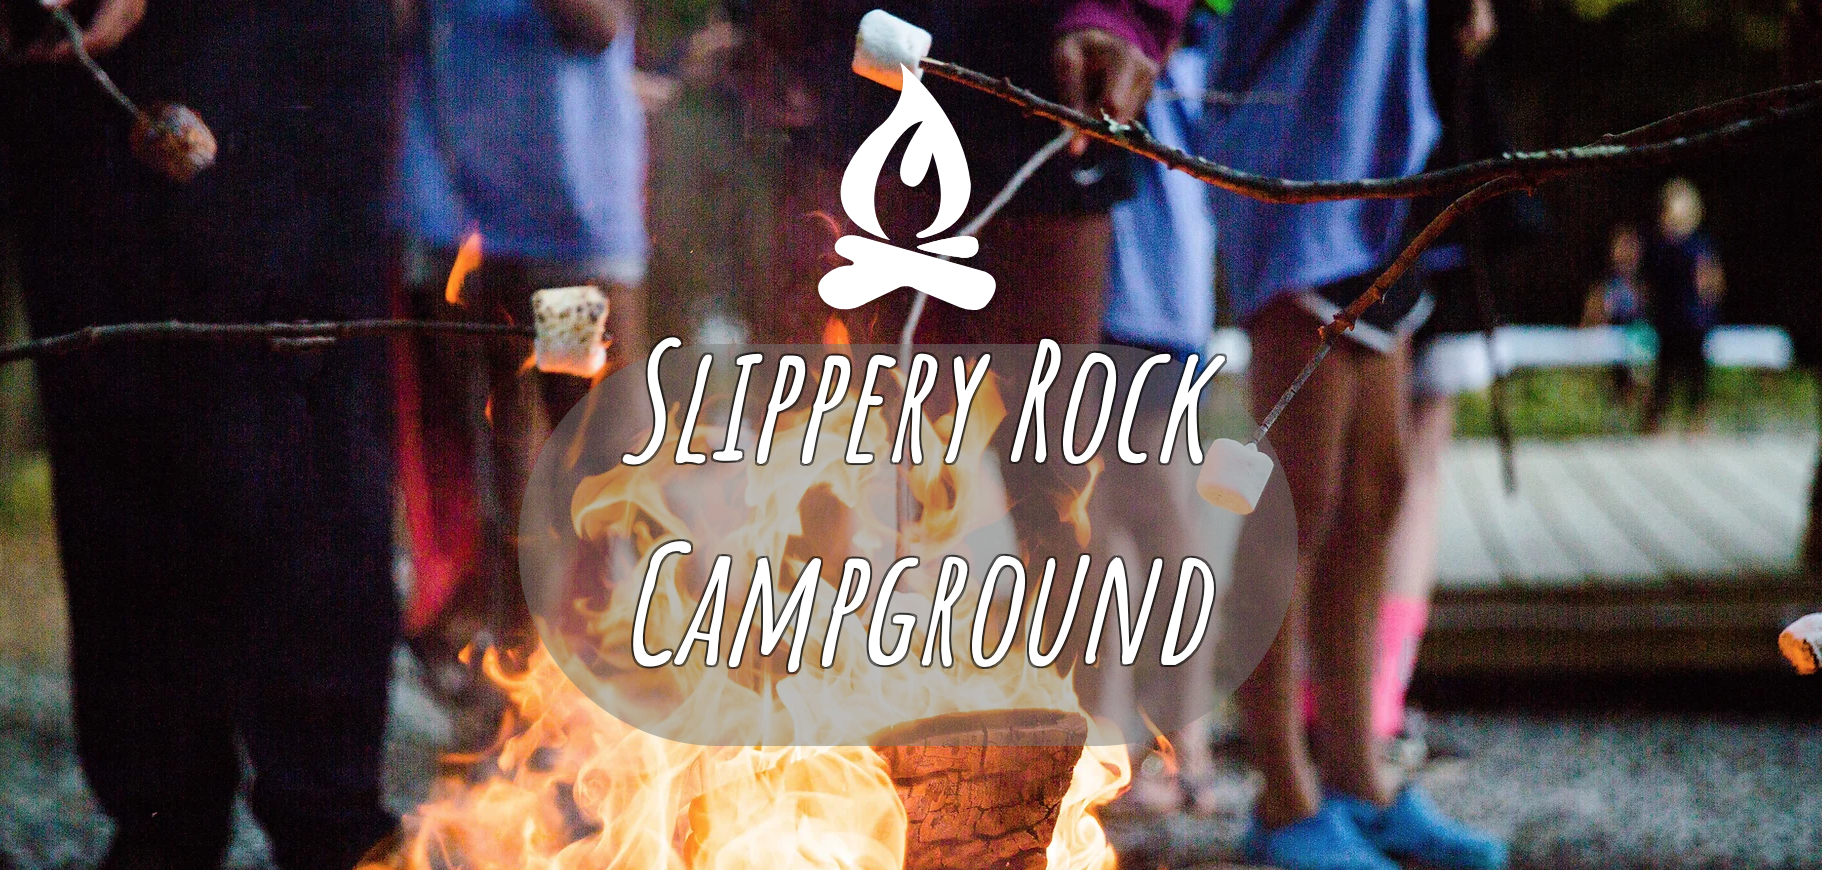 Slippery Rock Campground Association